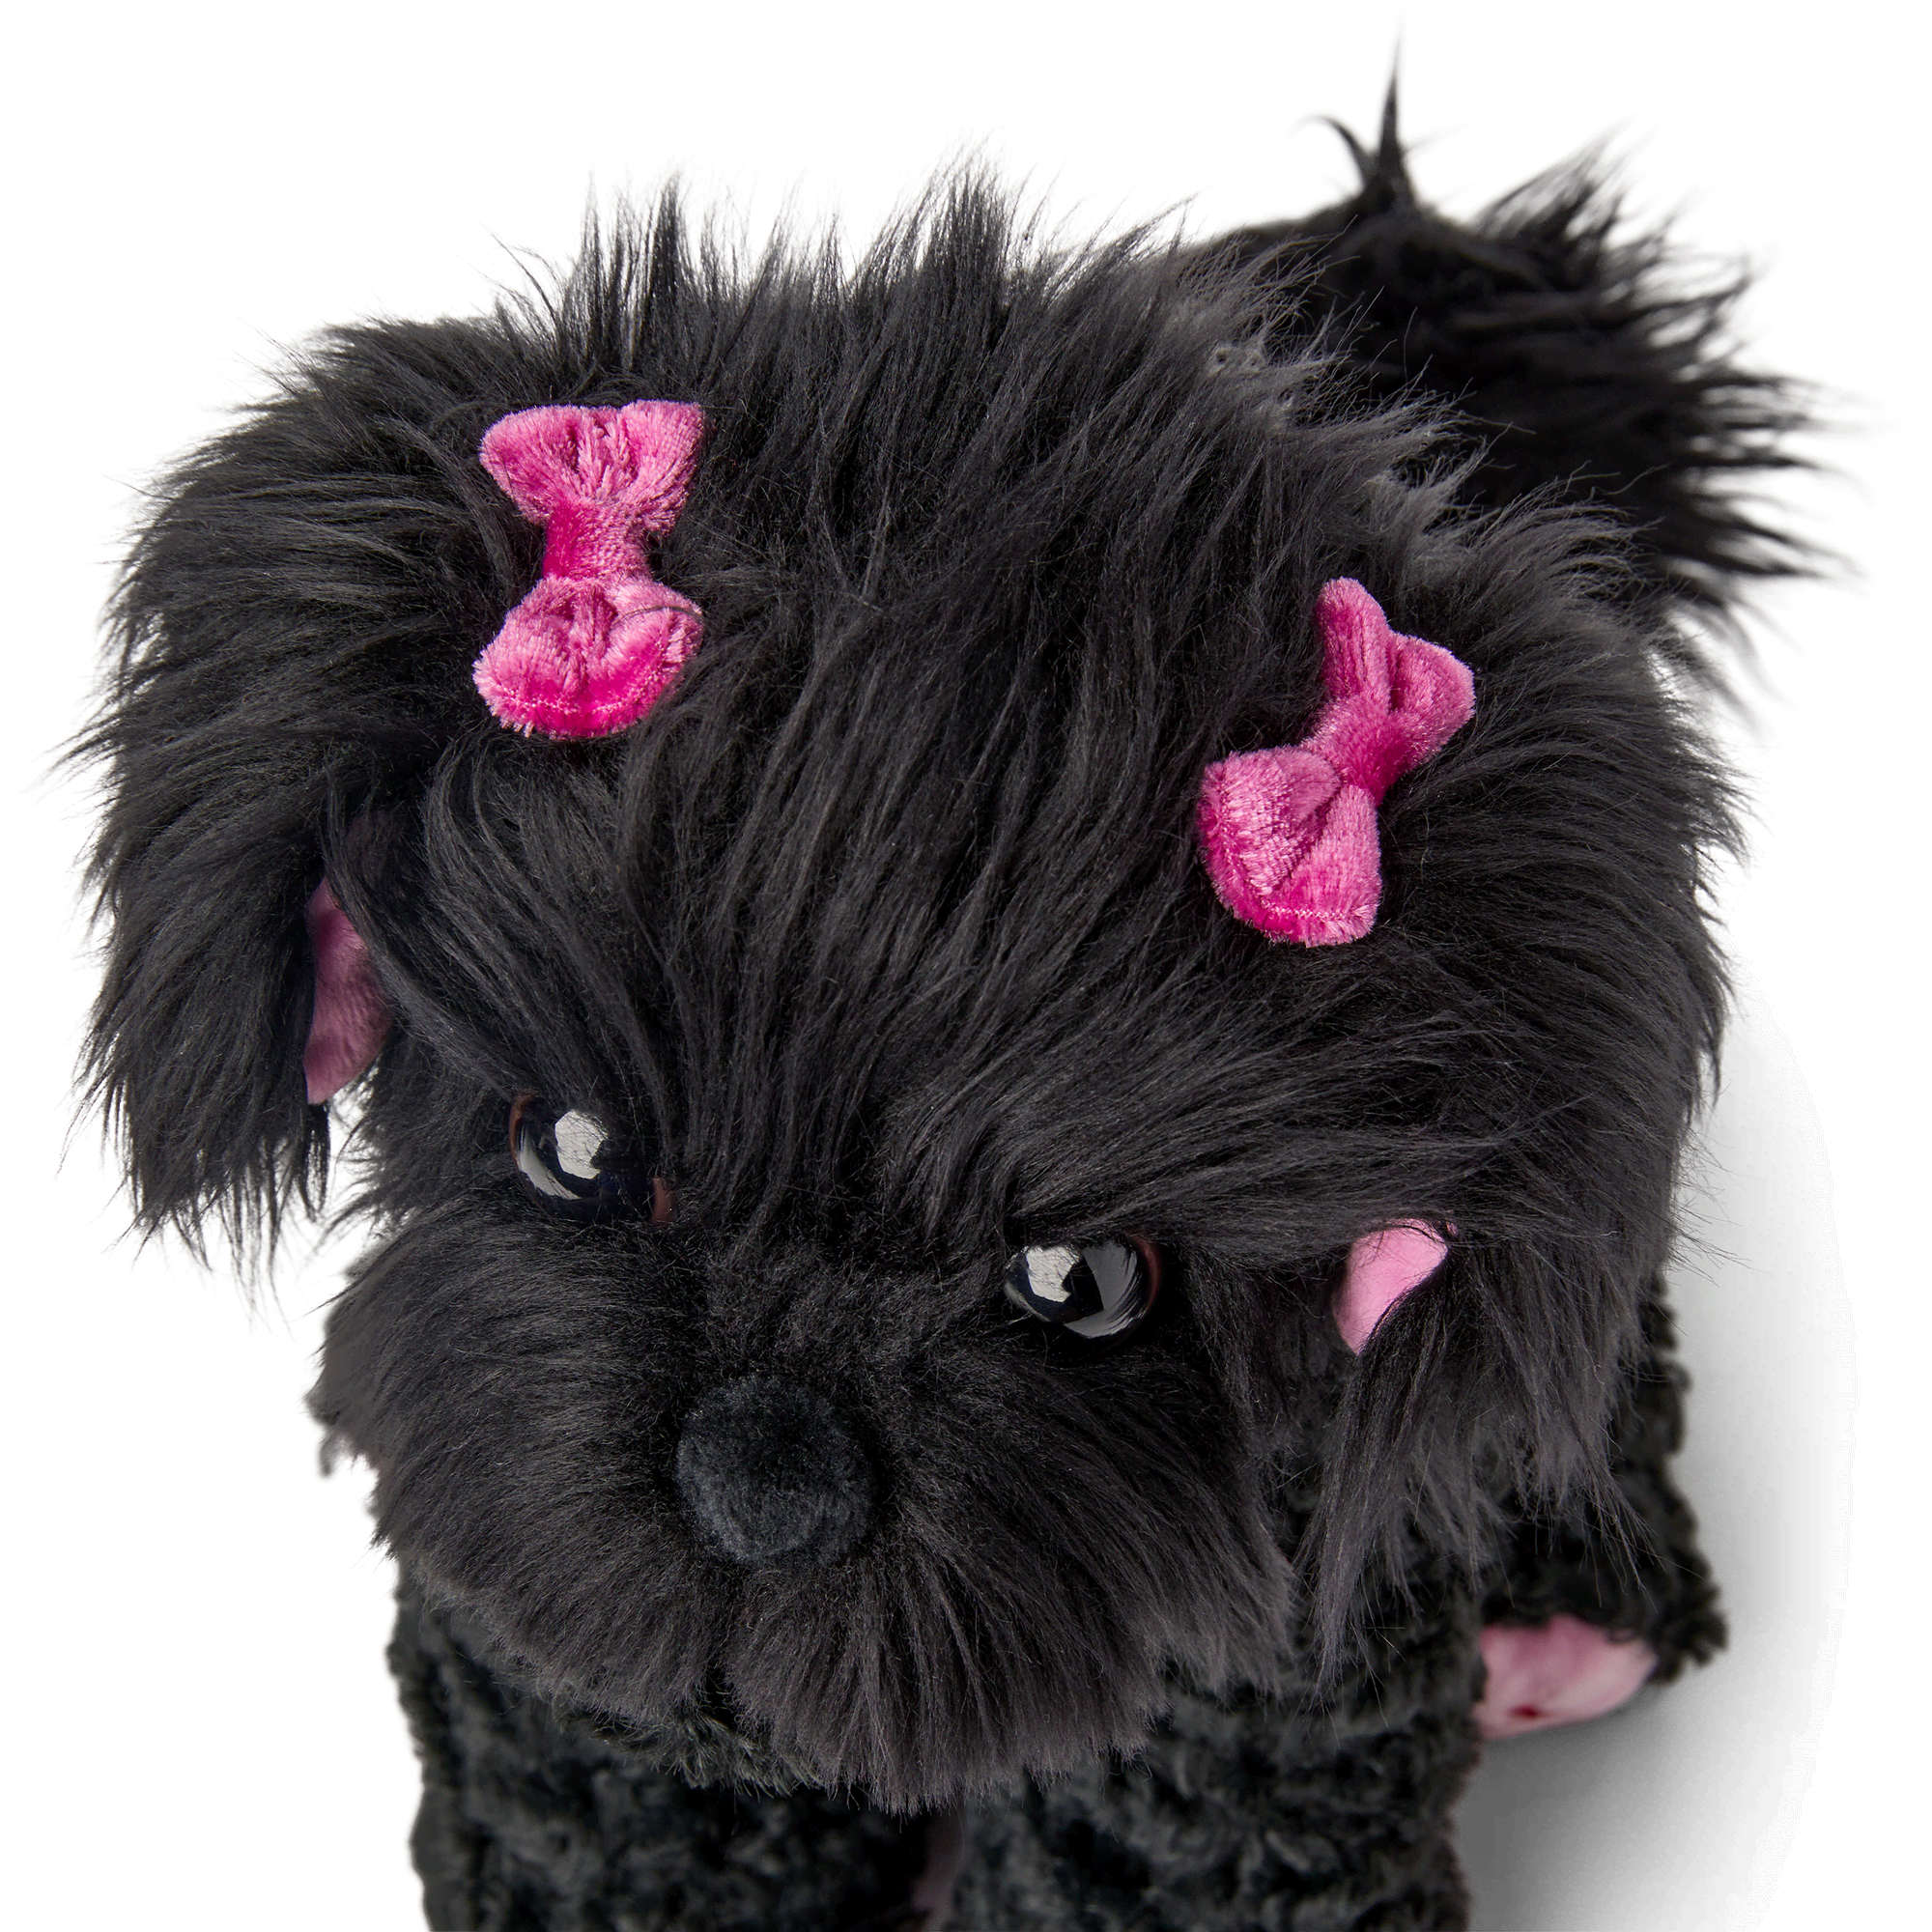 Shi-Poo Sweetie Dog Plush for Girls